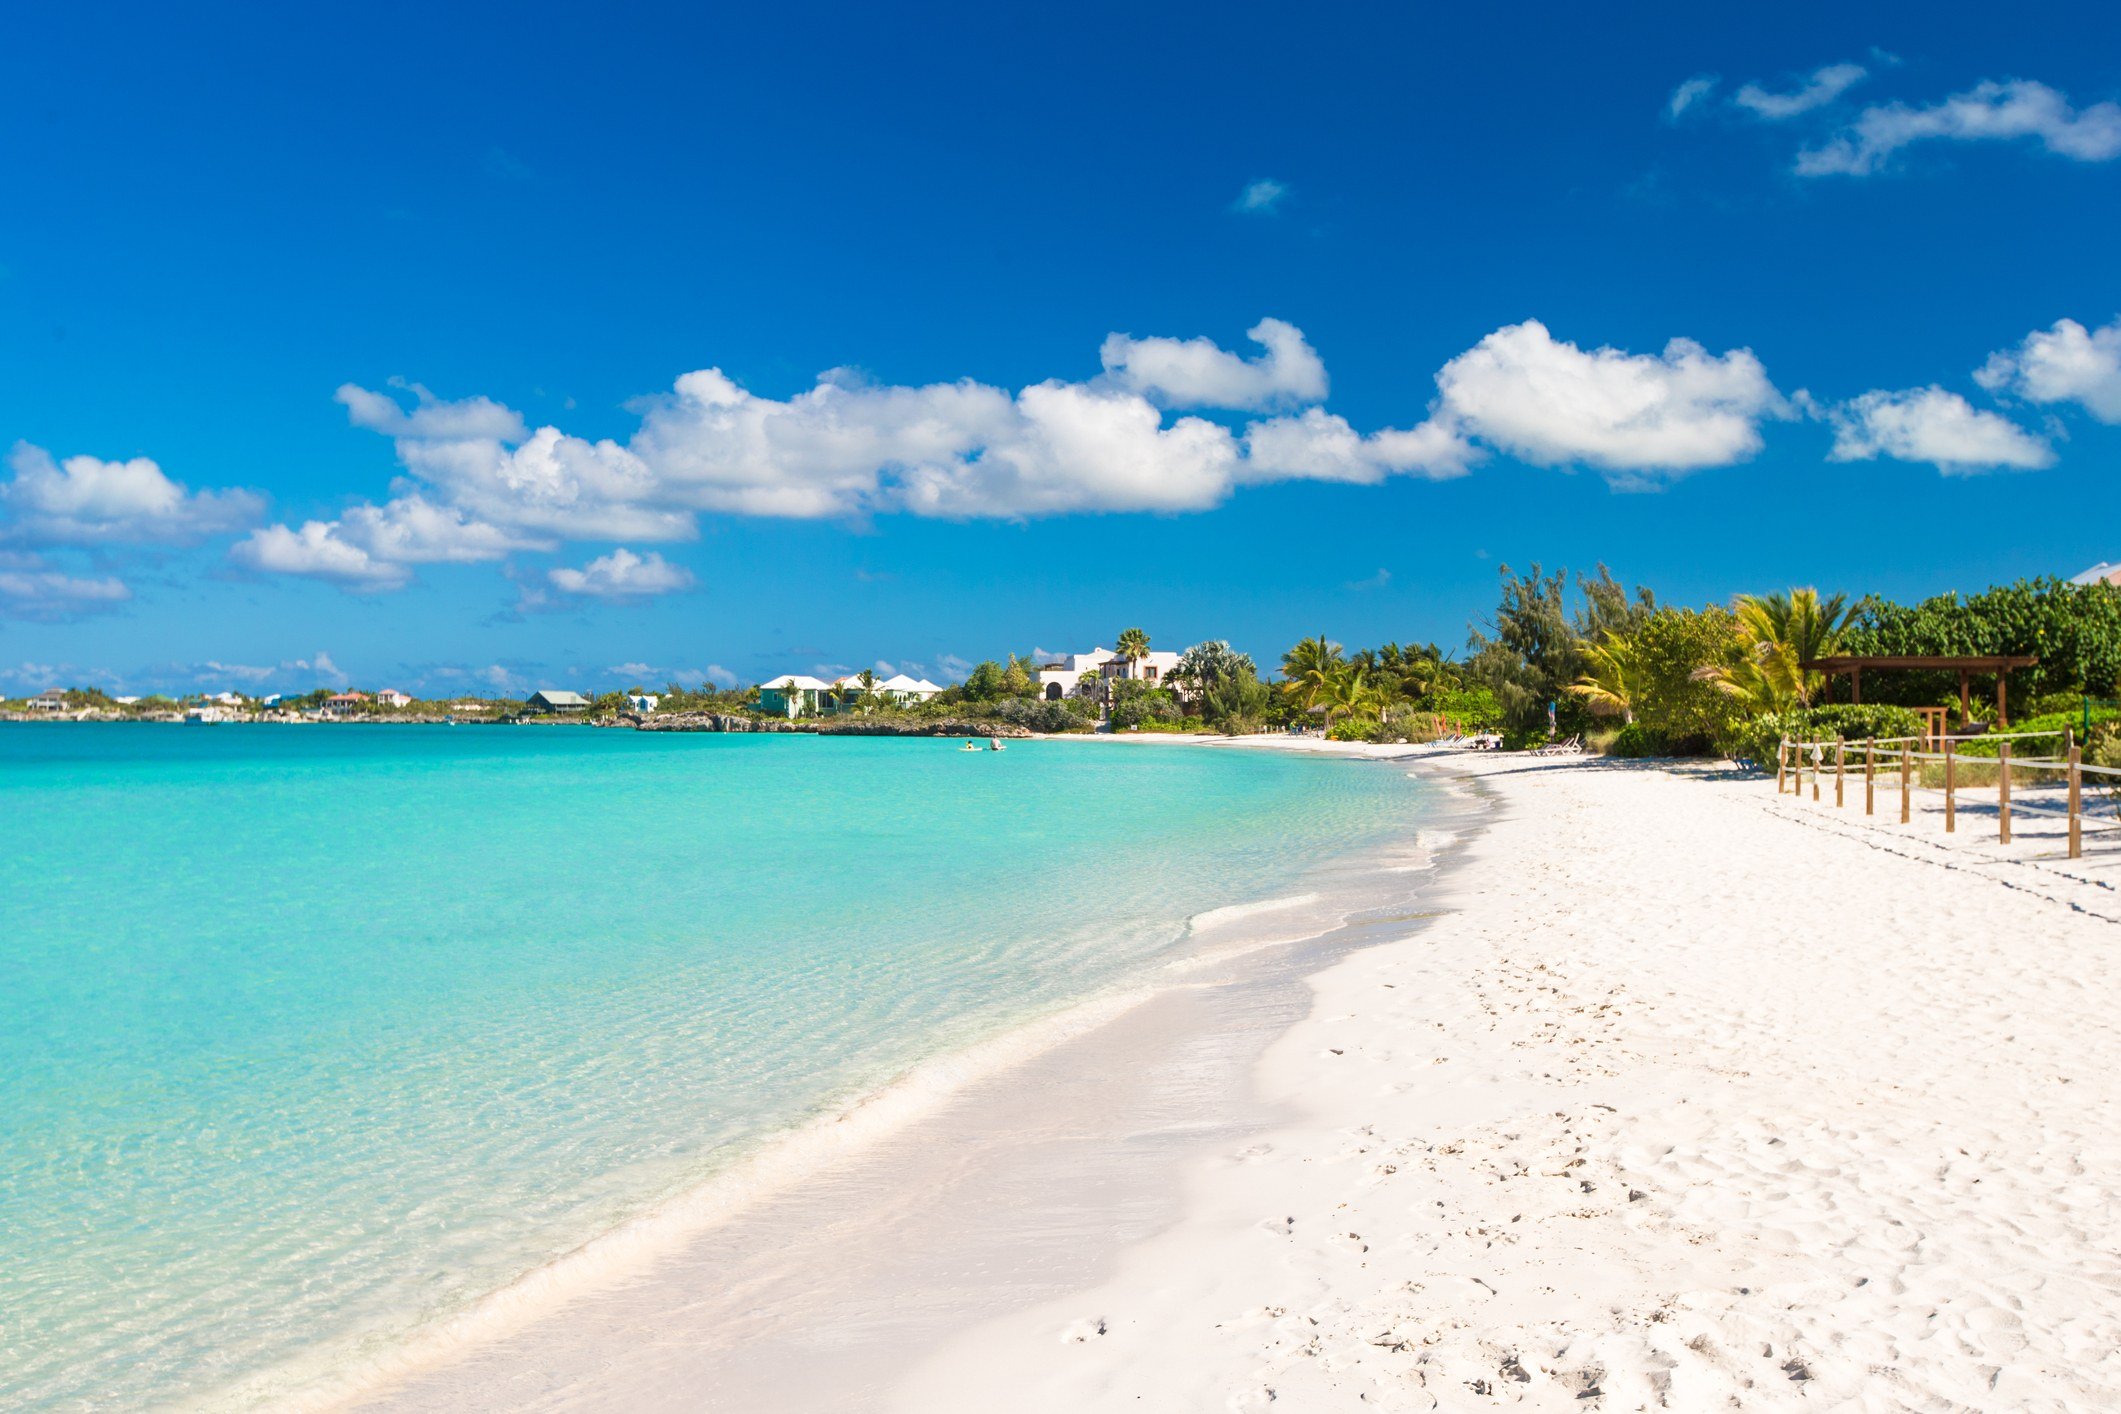 Ideal white beach in the Caribbean island